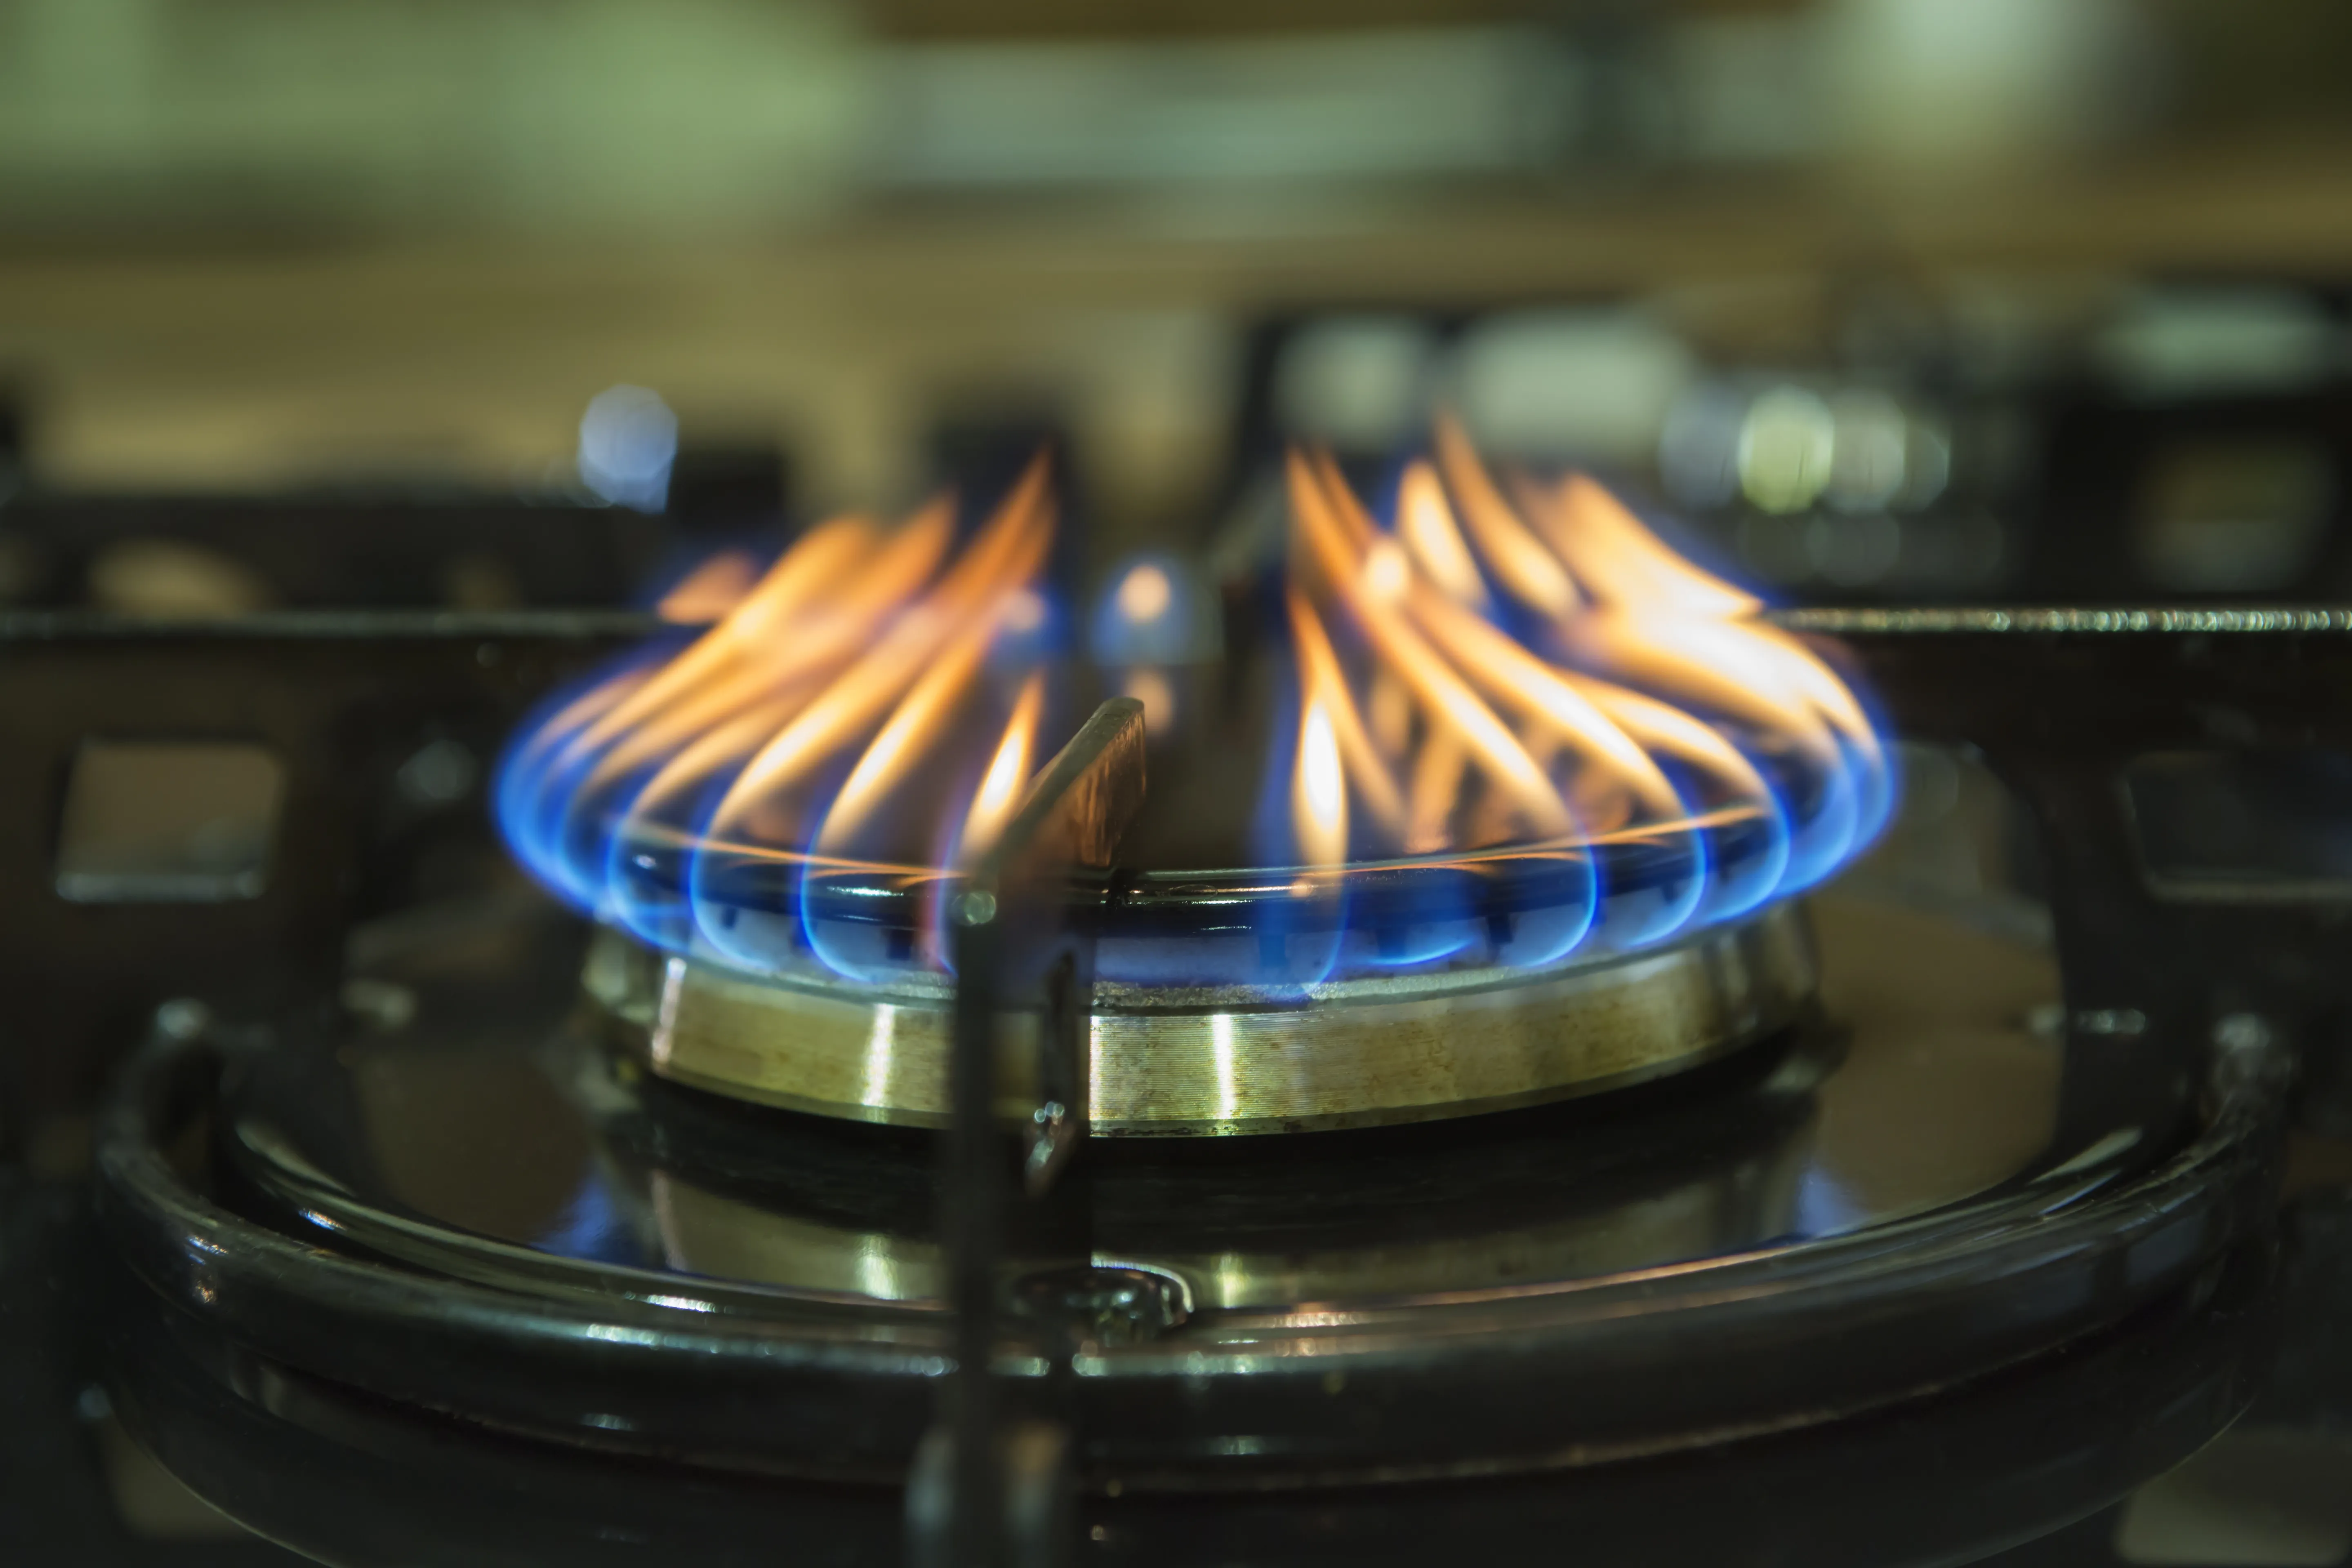 PROMO Energy - Natural Gas Flame Stove Burner - iStock - FotoCuisinette